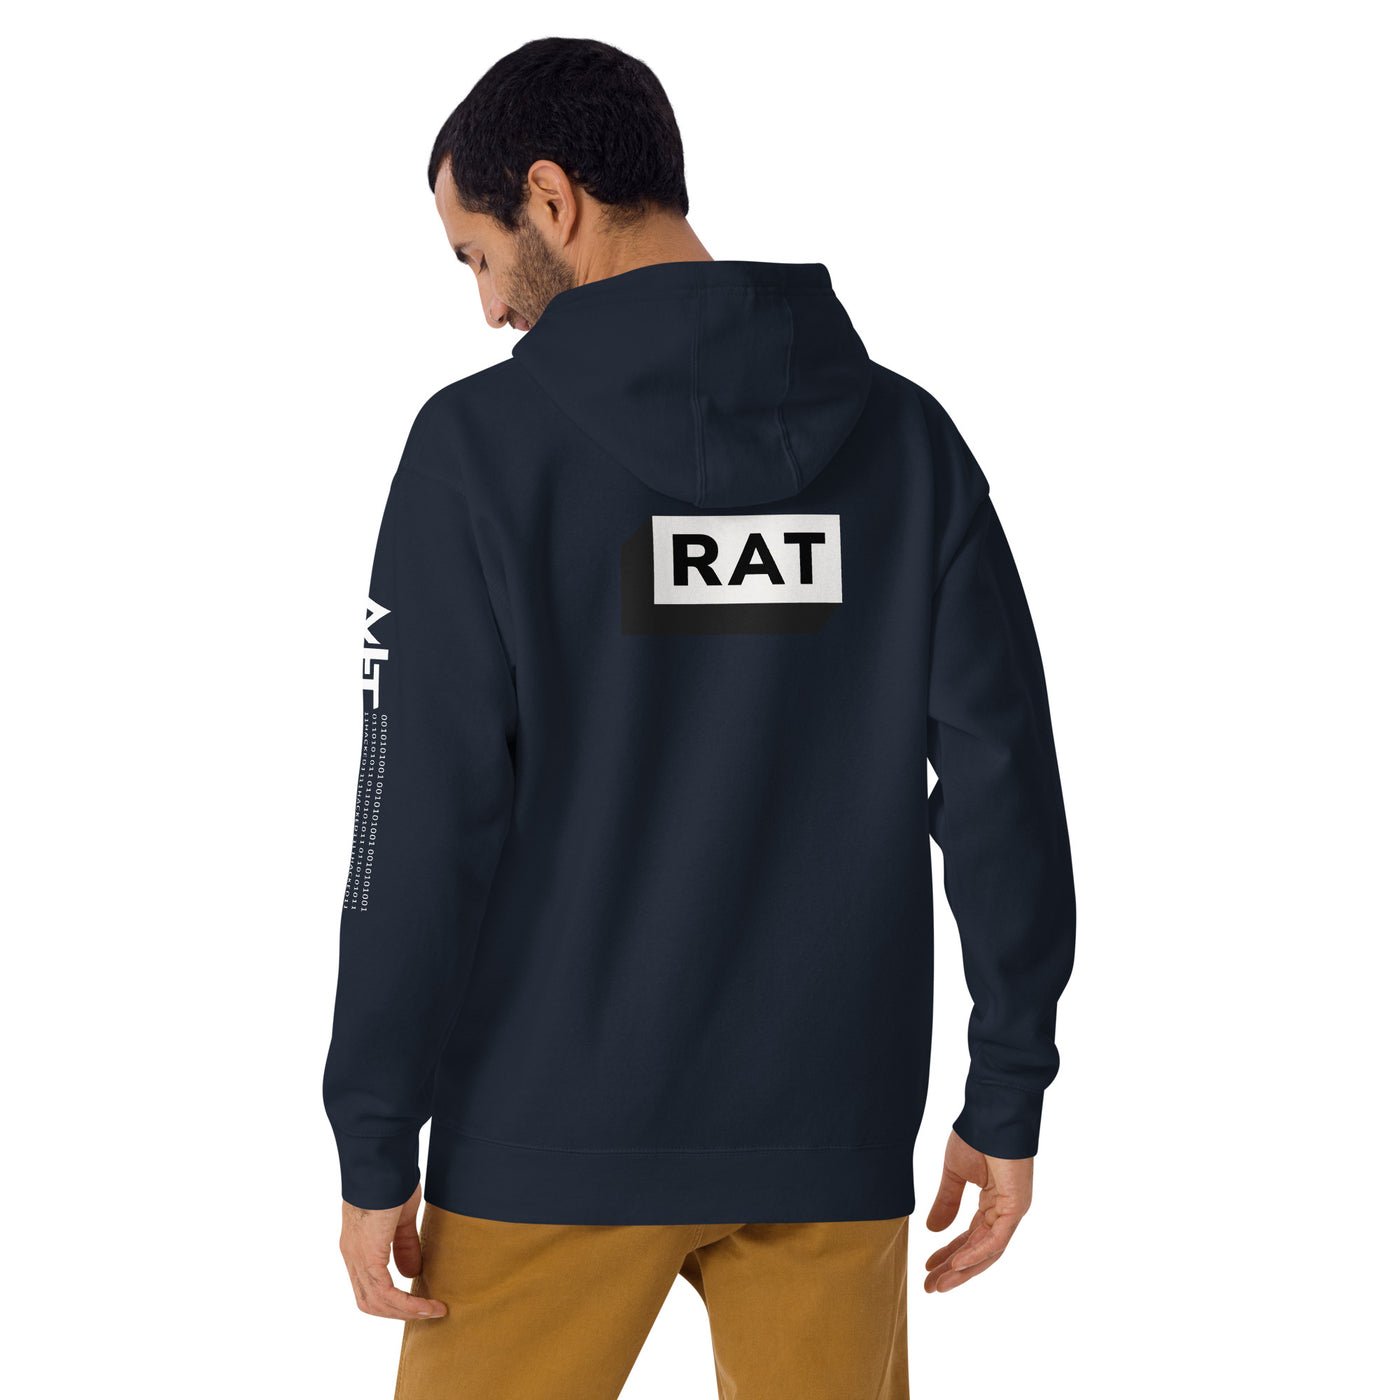 RAT (Remote Access Trojan ) - Unisex Hoodie (back print)